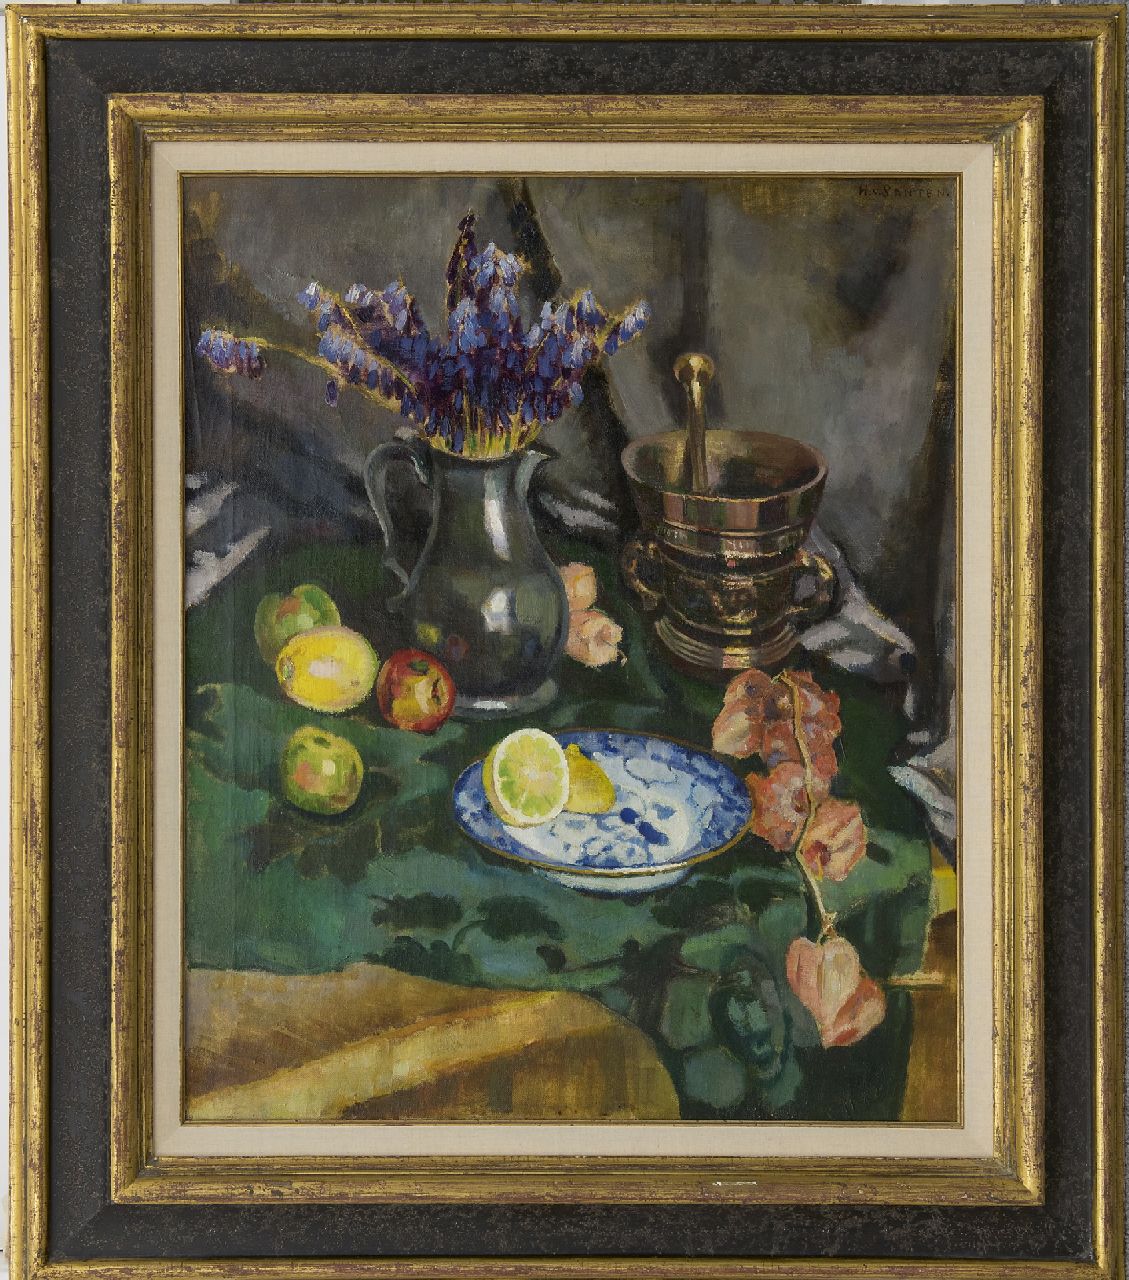 Santen A.J. van | Anna Jacoba 'Hans' van Santen, A still life with flowers, lemons and a mortar, oil on canvas 62.0 x 75.0 cm, signed u.r.